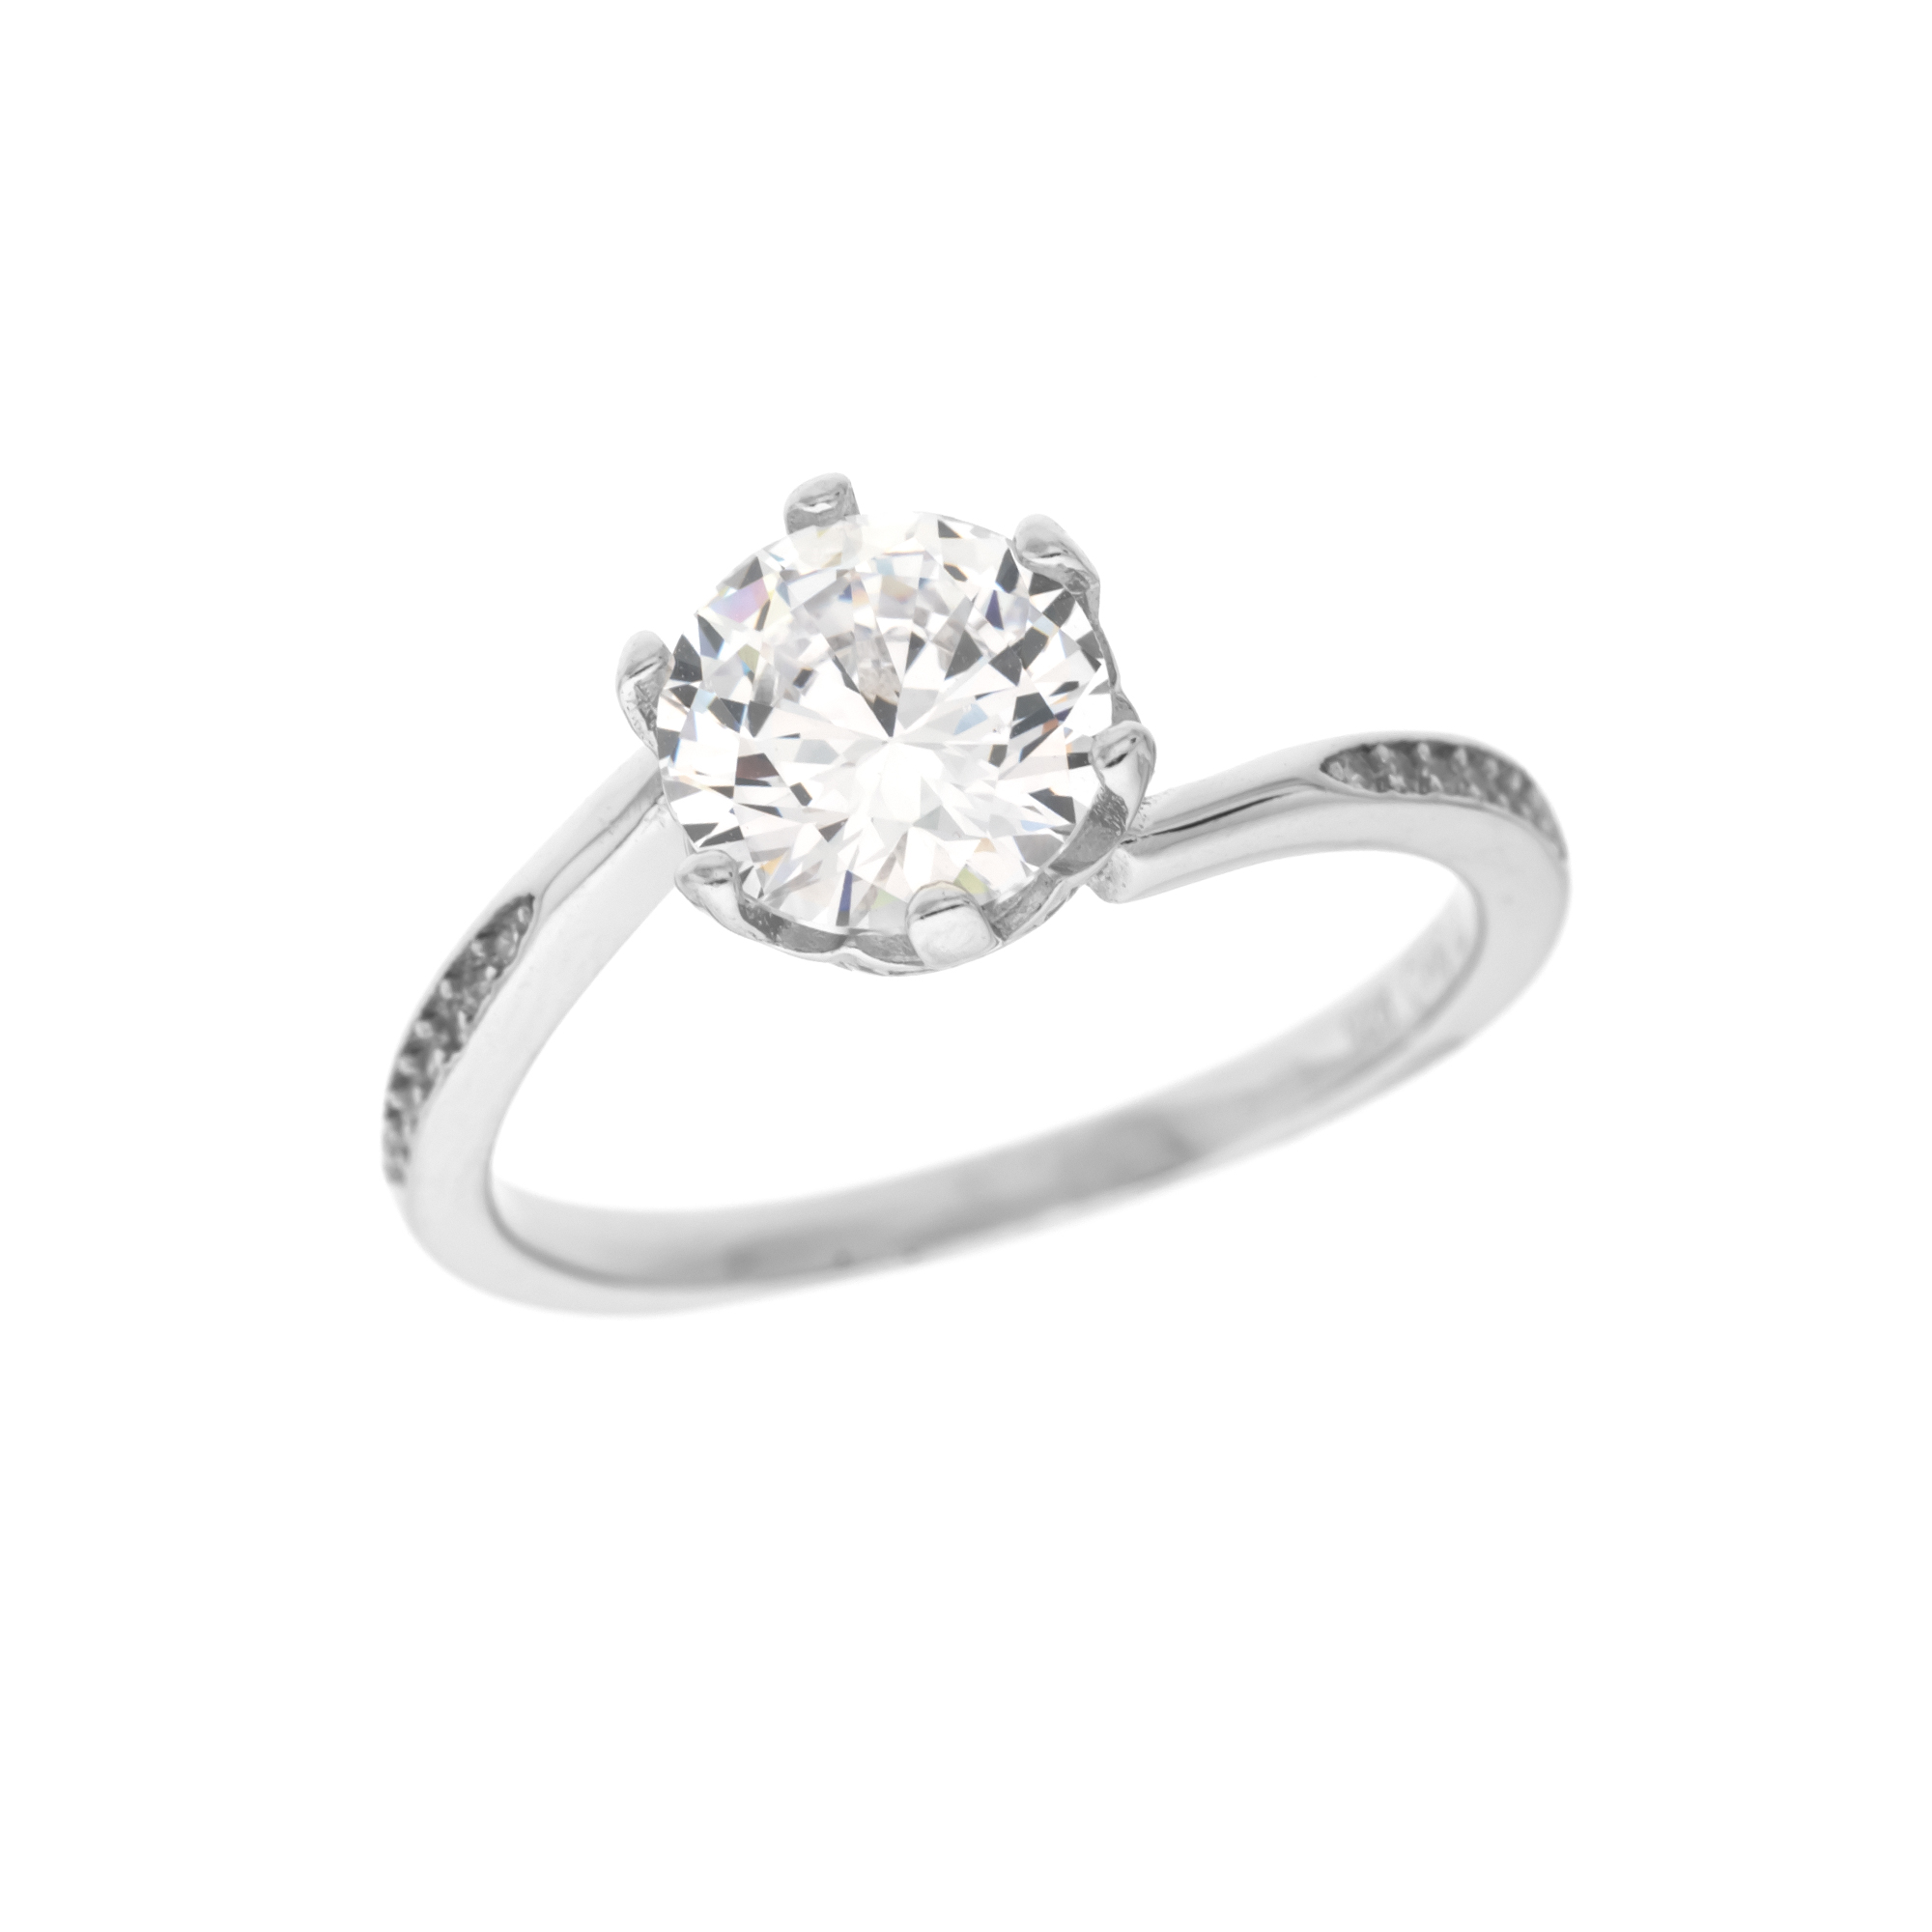 Stříbrný prsten SOLITÉR Velikost prstenu: 56 Ag 925/1000